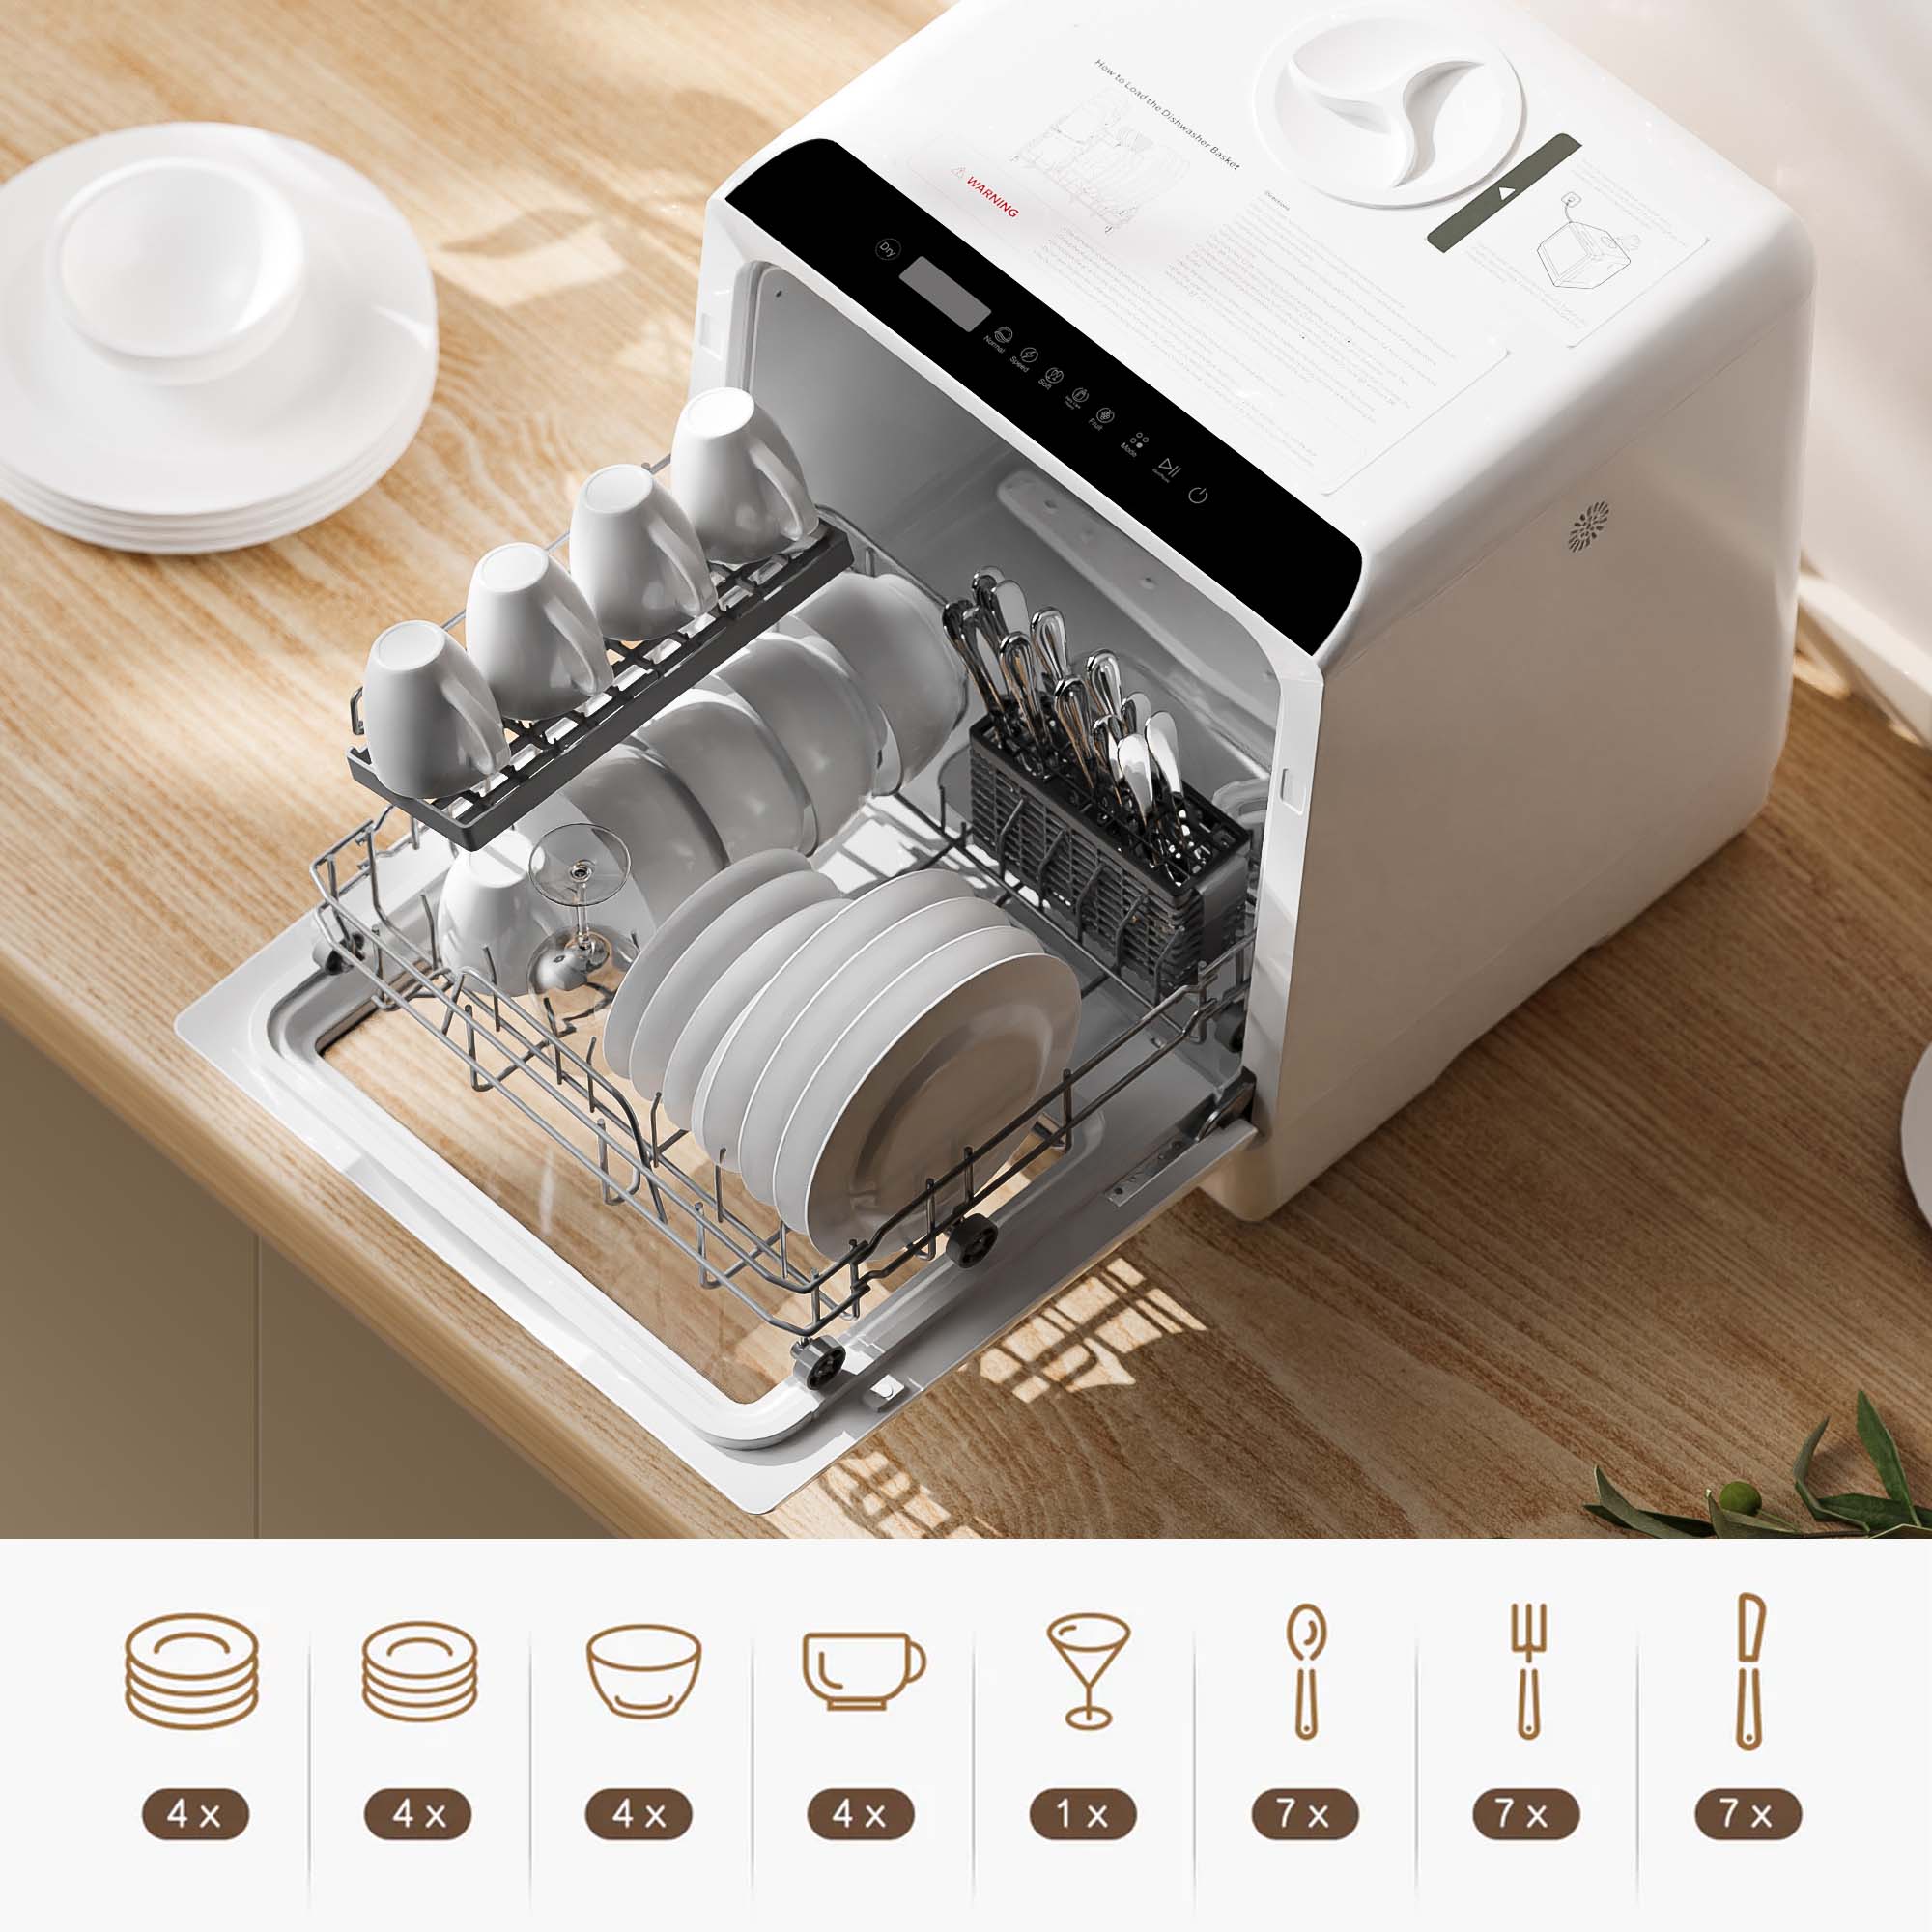 Hava R01 Compact Countertop Dishwasher $279.99 (reg $400)